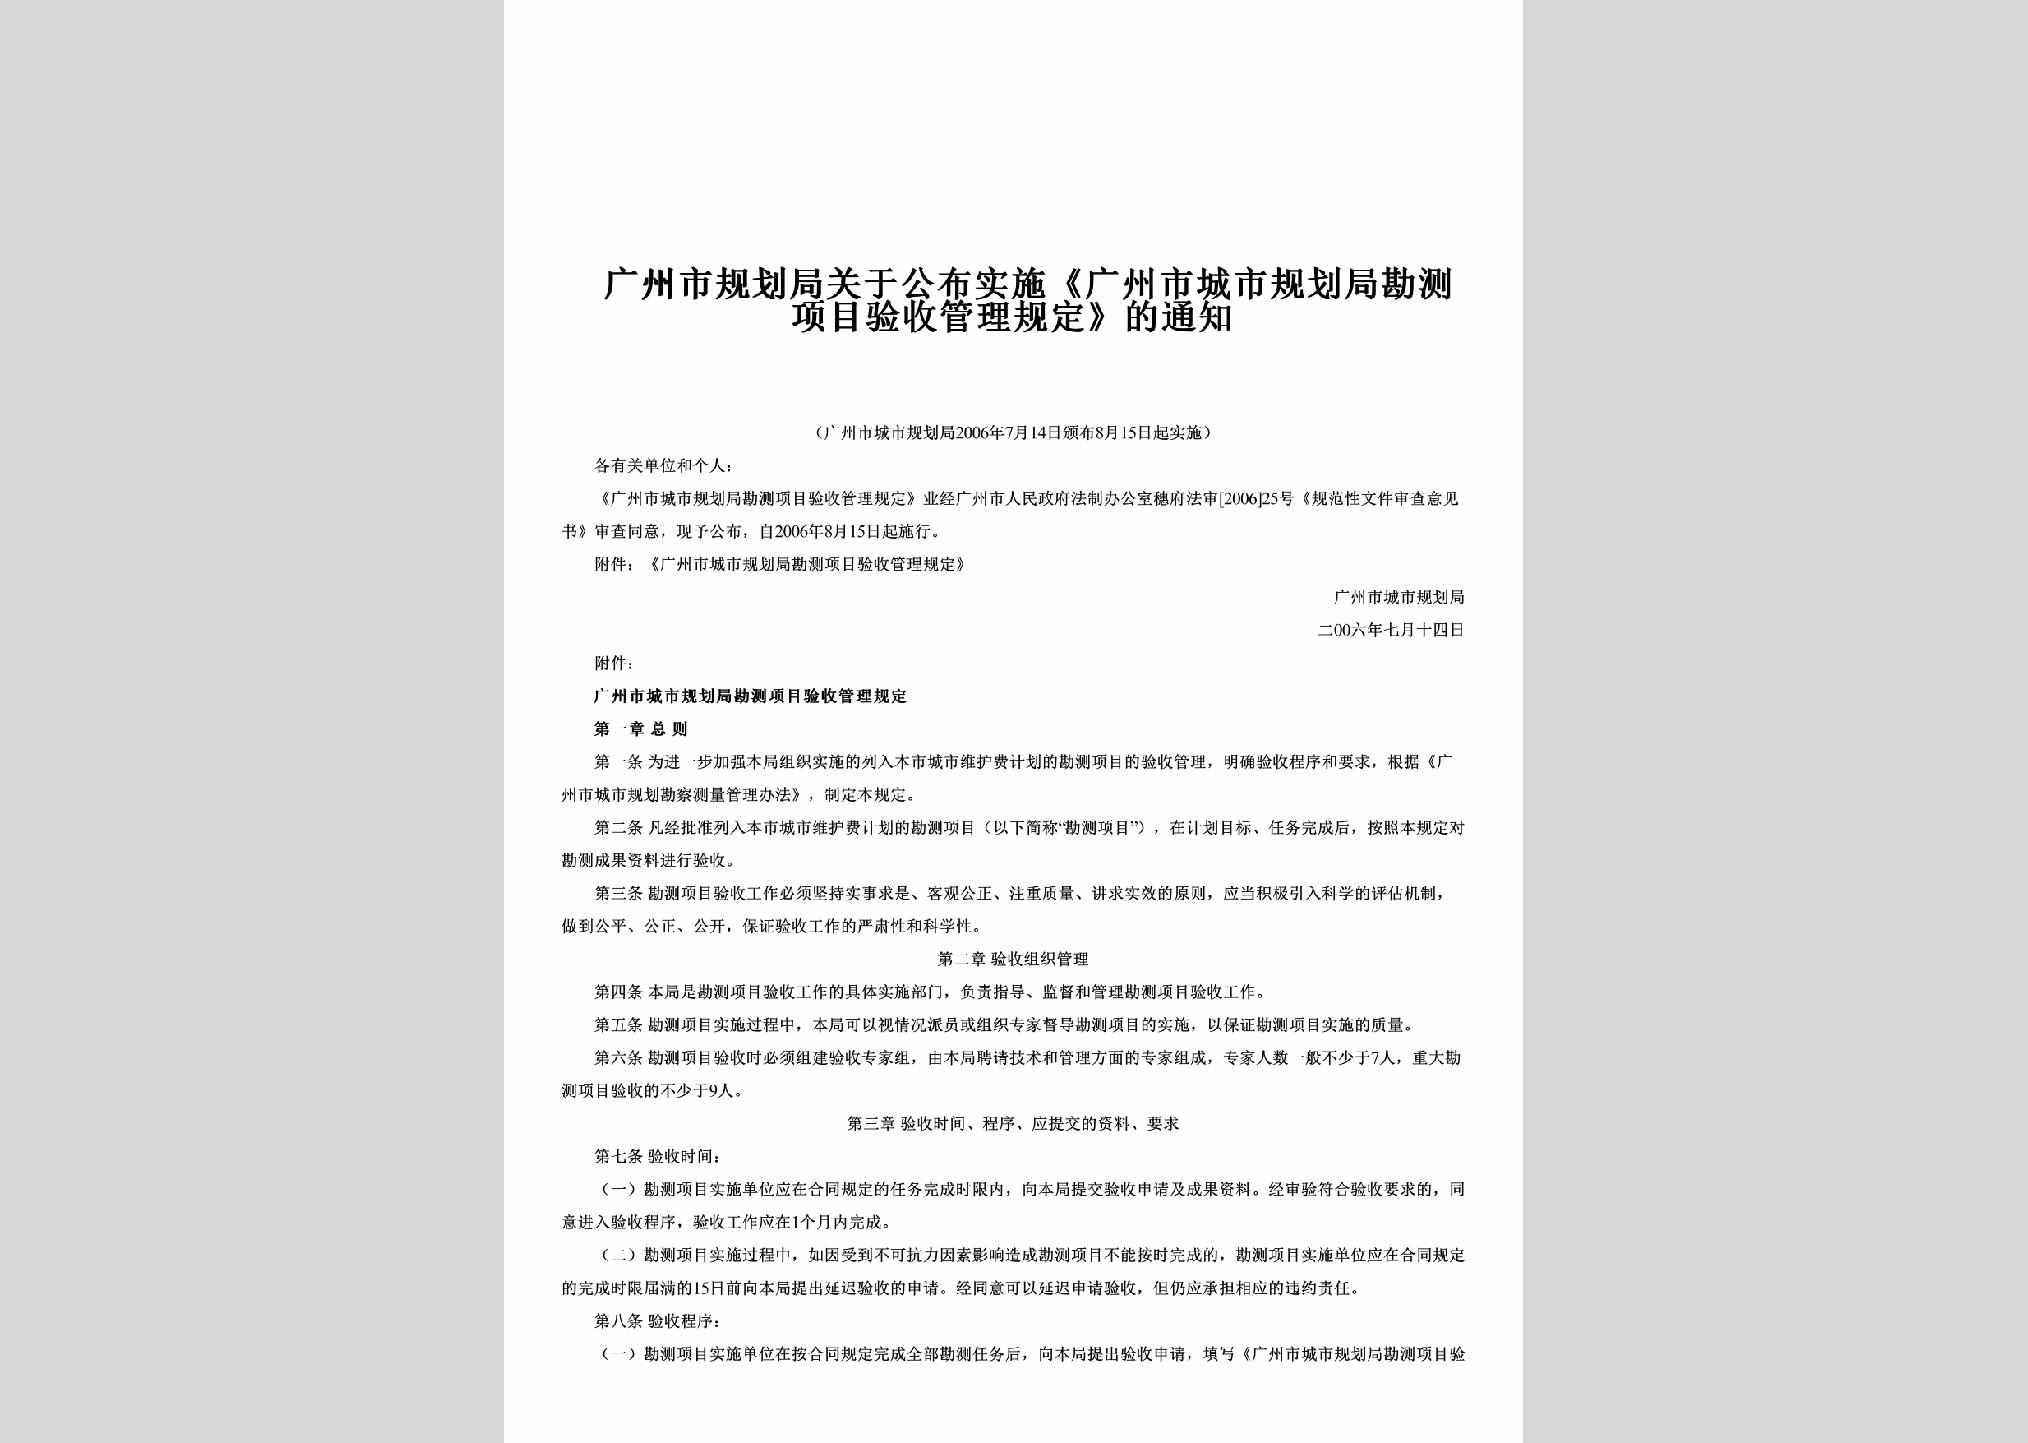 GD-CSGHXMYS-2006：关于公布实施《广州市城市规划局勘测项目验收管理规定》的通知